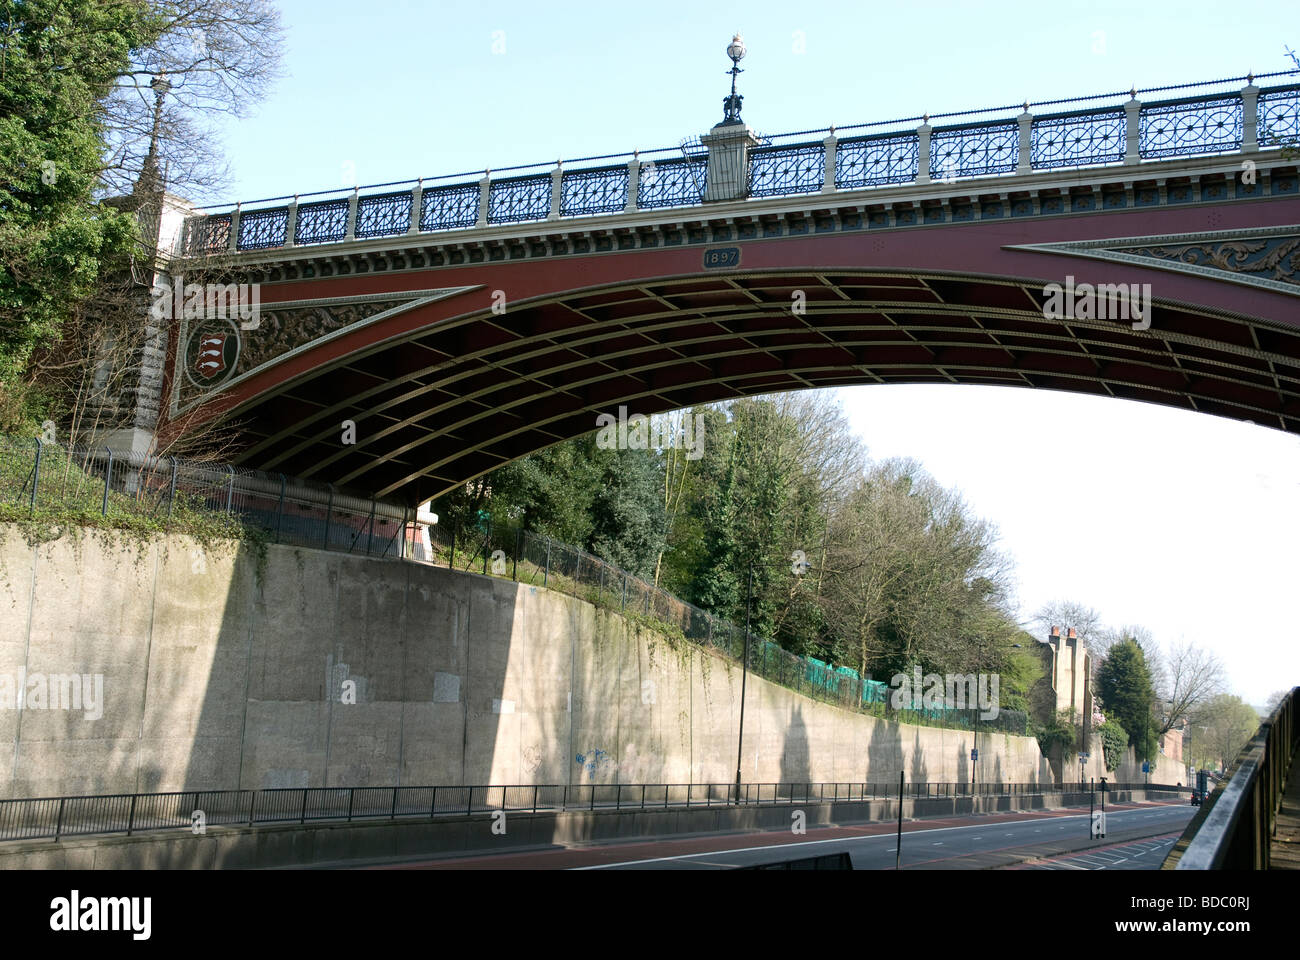 Hornsey Lane Bridge over Archway Road, Highgate London Stock Photo